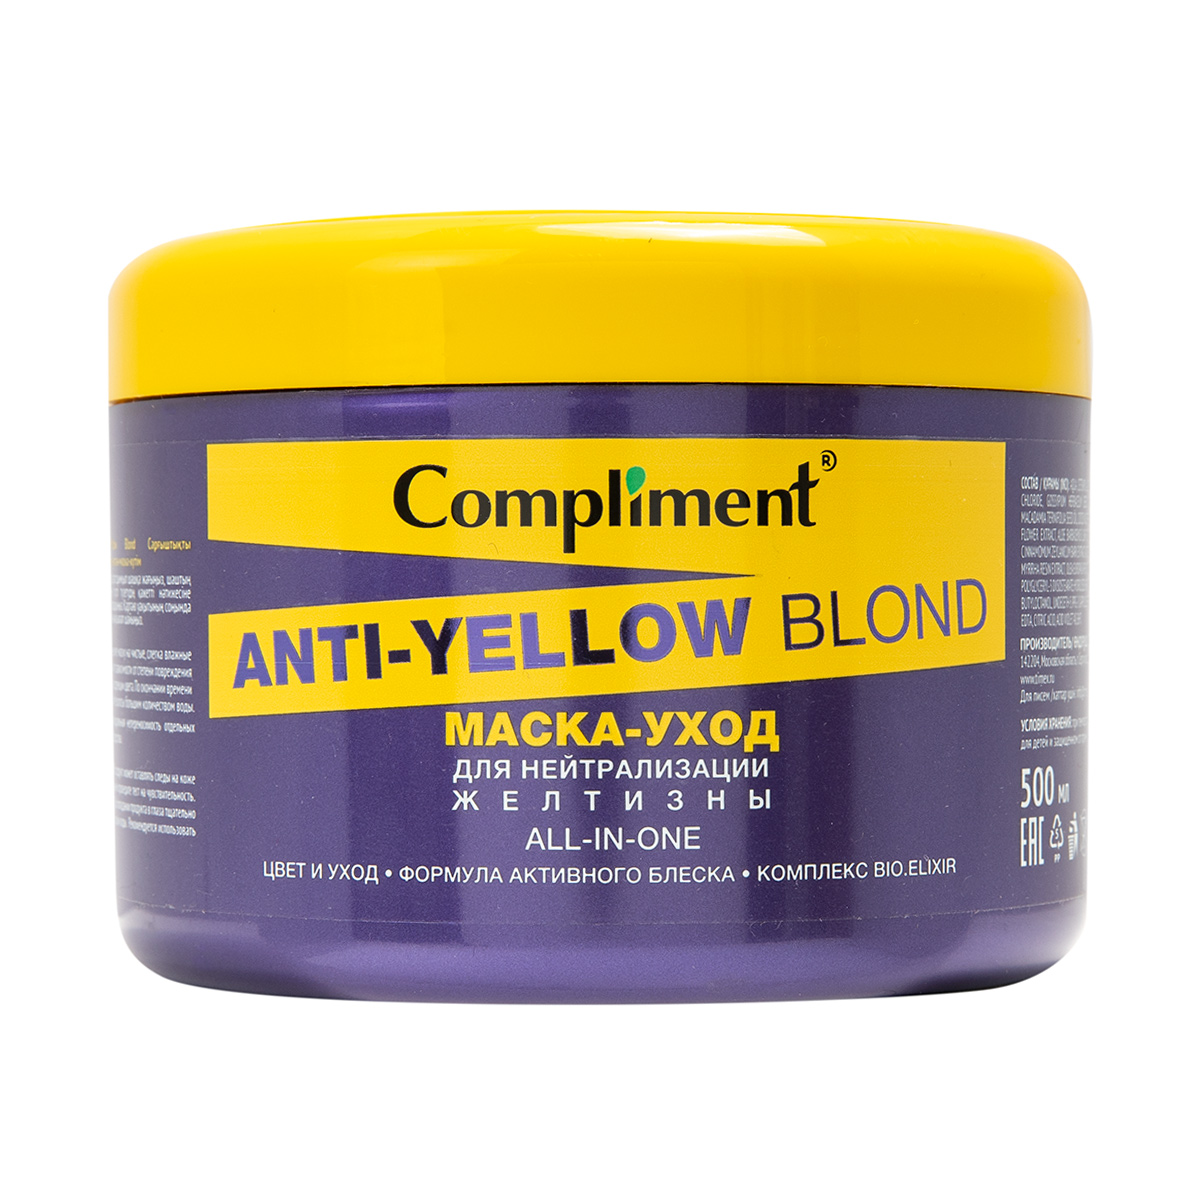 Маска для волос clean anti yellow. Compliment Anti-Yellow blond. Комплимент blondie Mania маска питательная нейтрализатор желтизны,500 мл. Матрикс маска для волос блонд. Compliment Anti-Yellow blond шампунь для нейтрализации желтизны, 300мл.